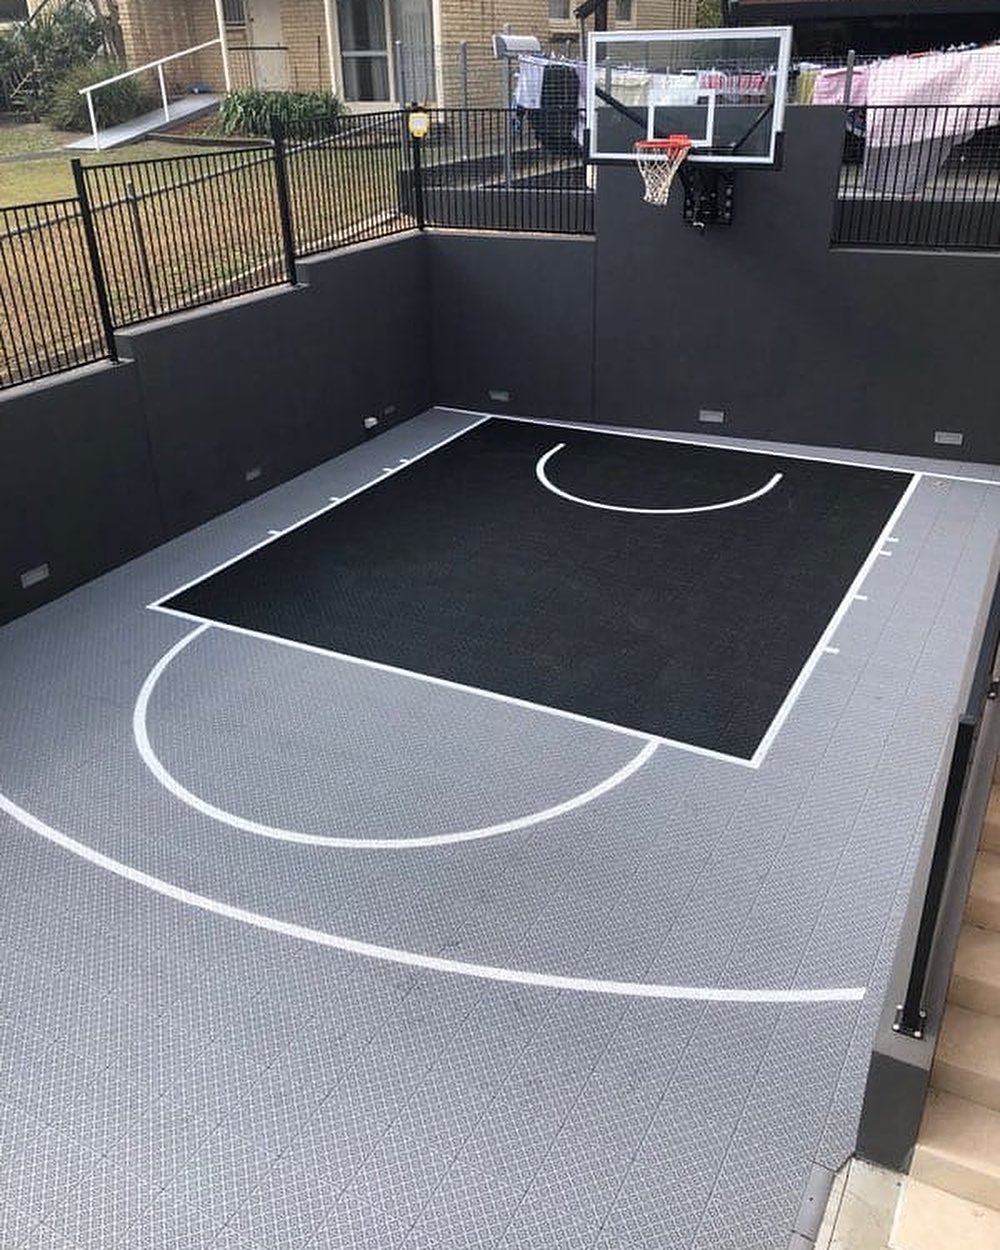 Backyard Basketball Court Diy Kit, Basketball Court Tiles